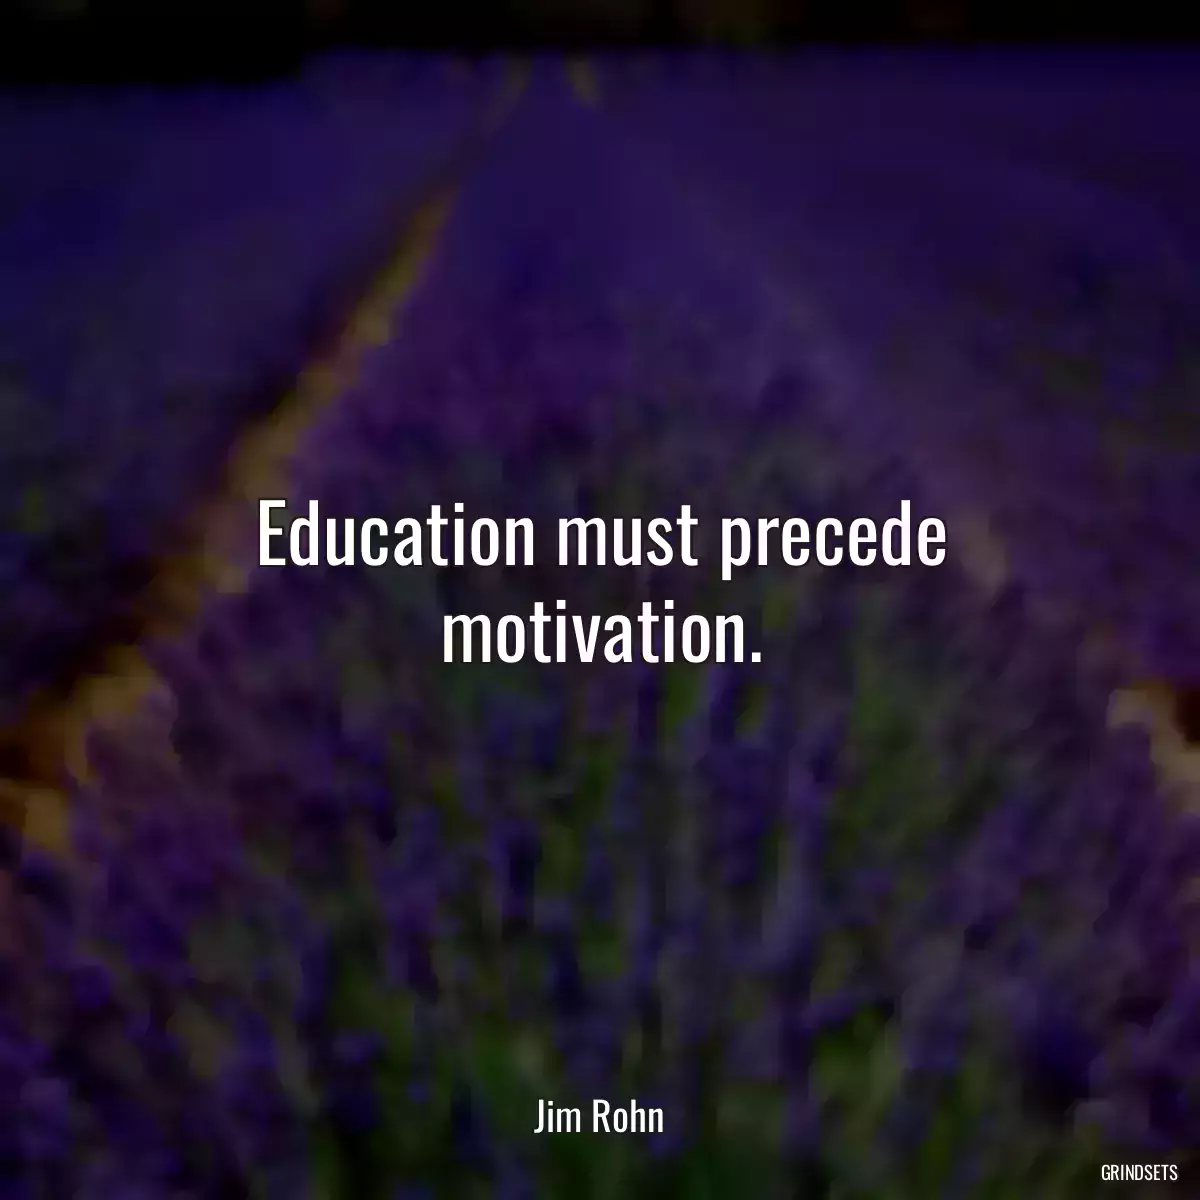 Education must precede motivation.